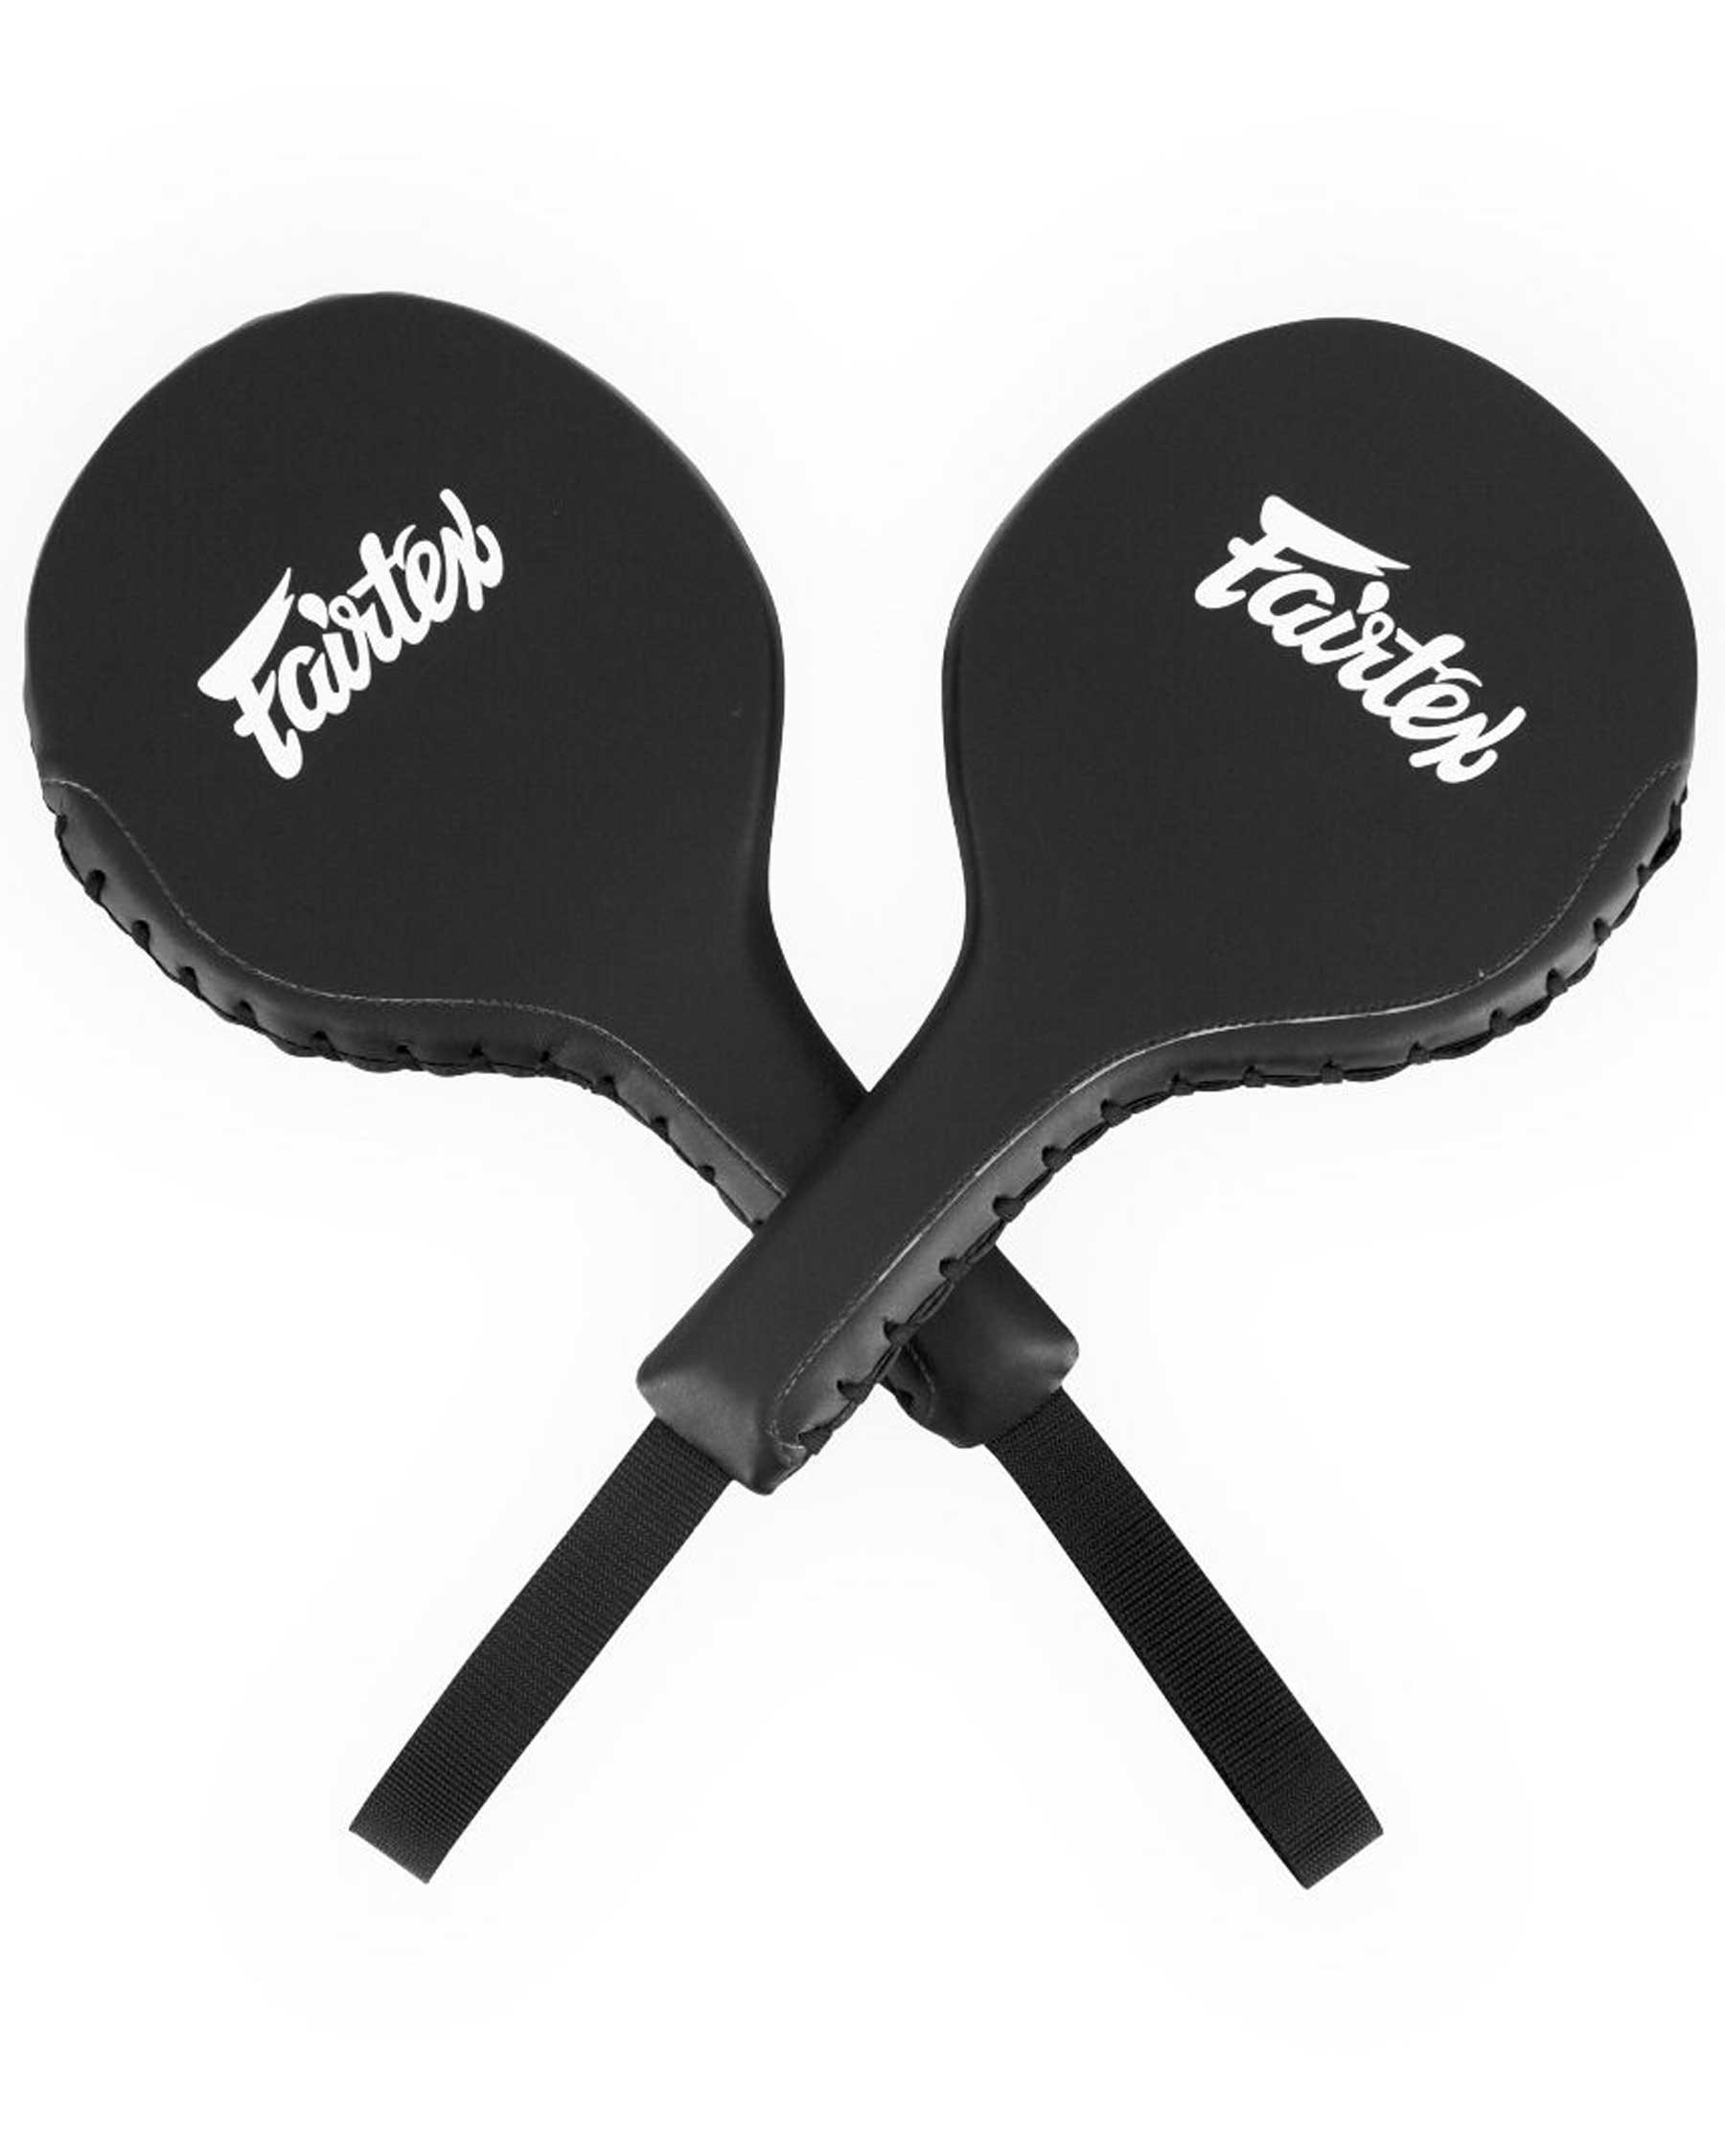 Fairtex BXP1 boxing paddles